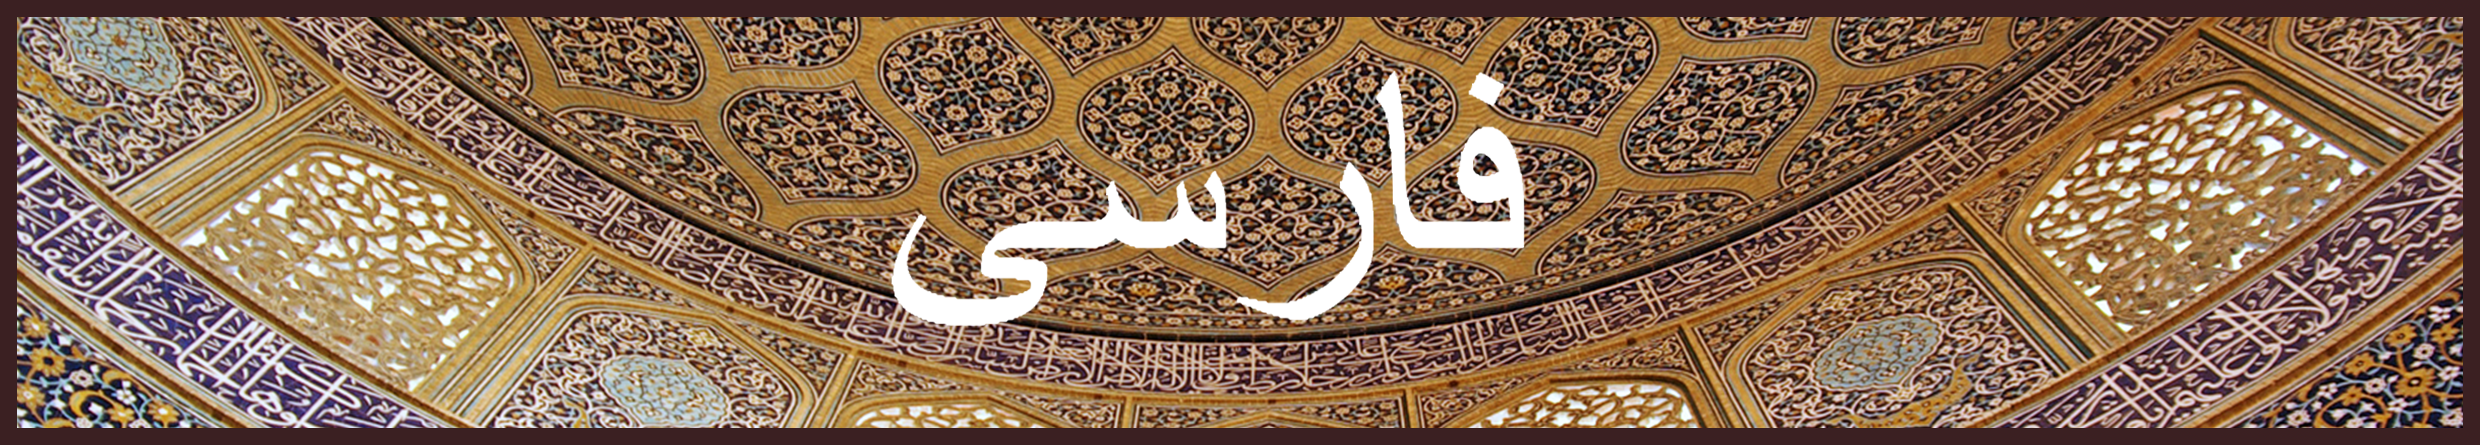 persian banner final 